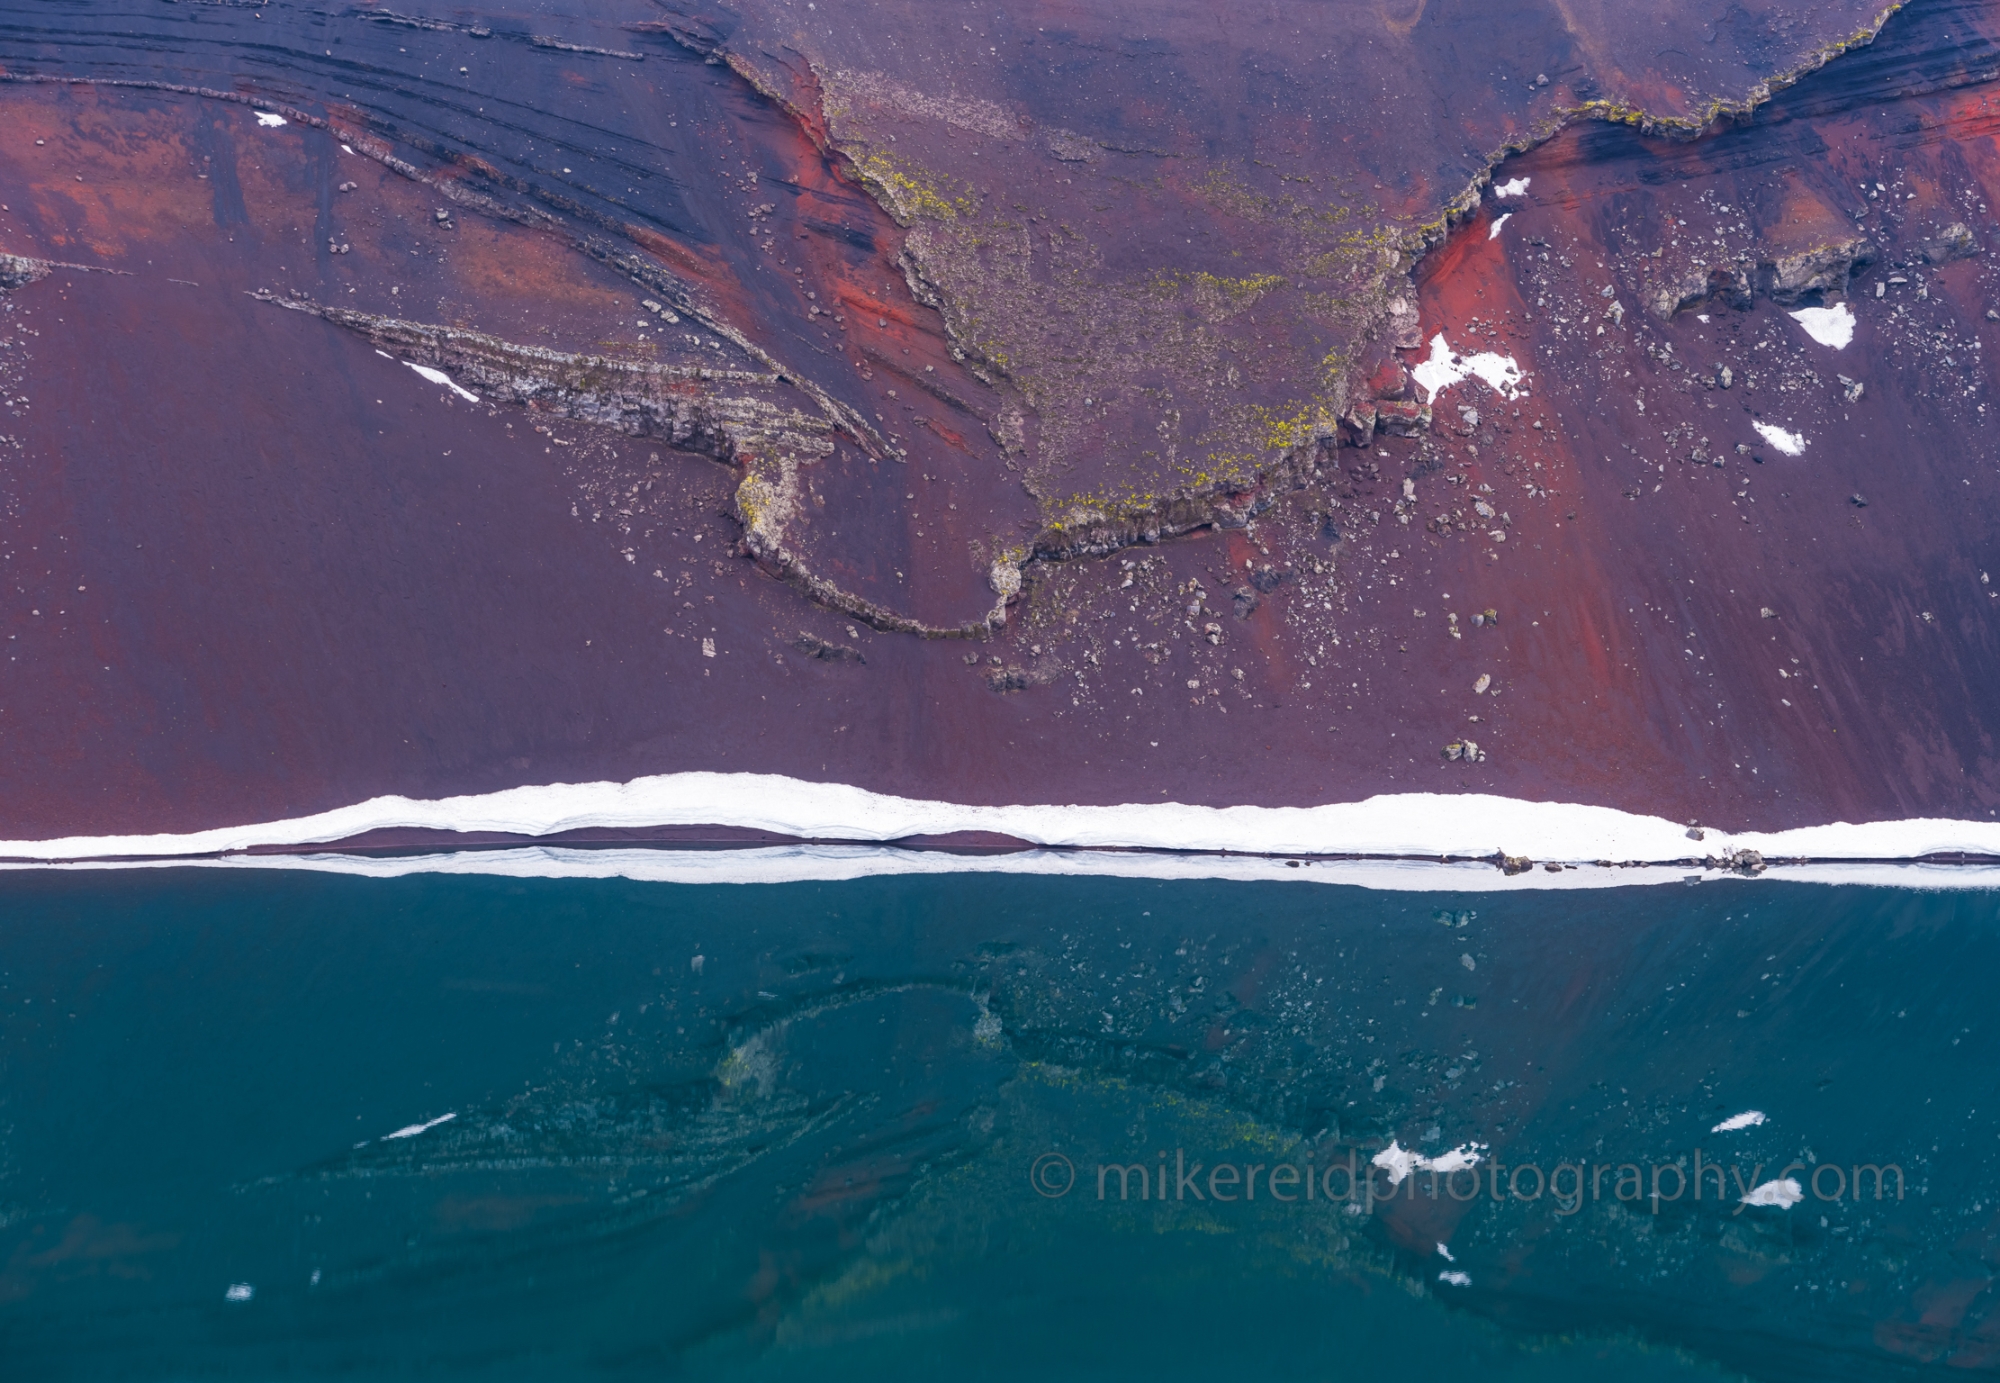 Iceland Volcanic Lake Edge.jpg 